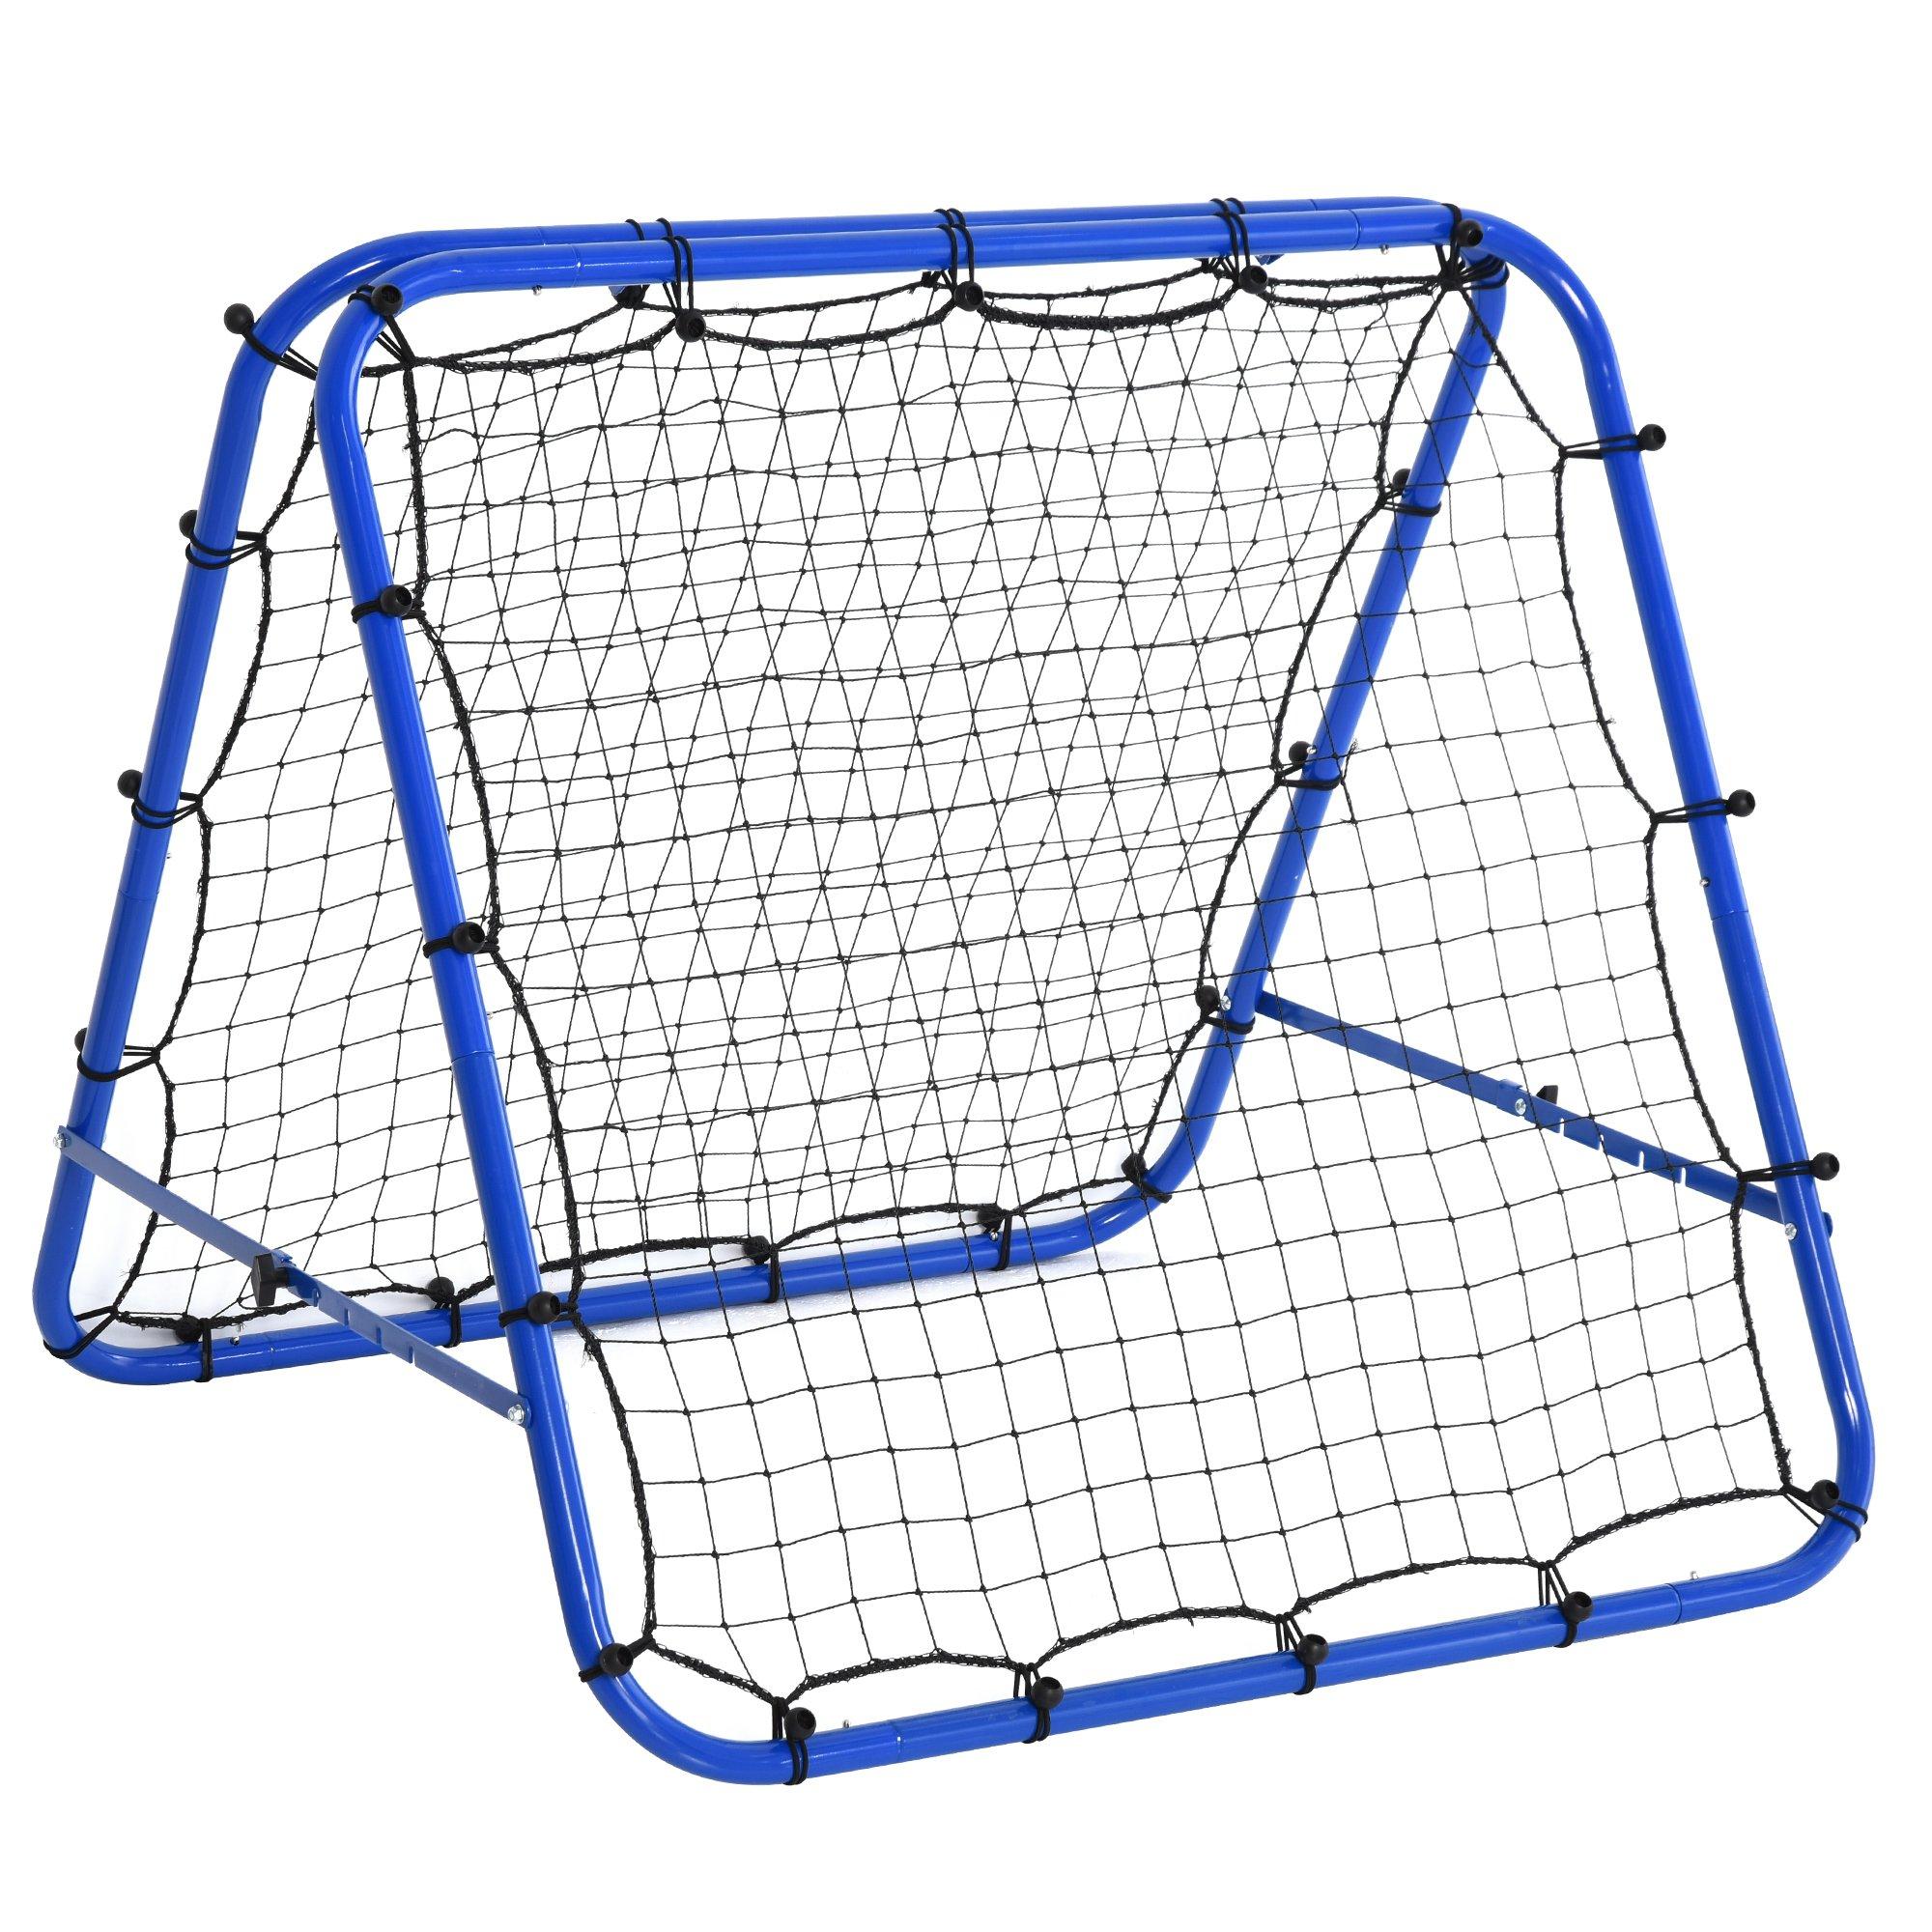 Rebounder Net Football Target Goal Play Training Adjustable Angles